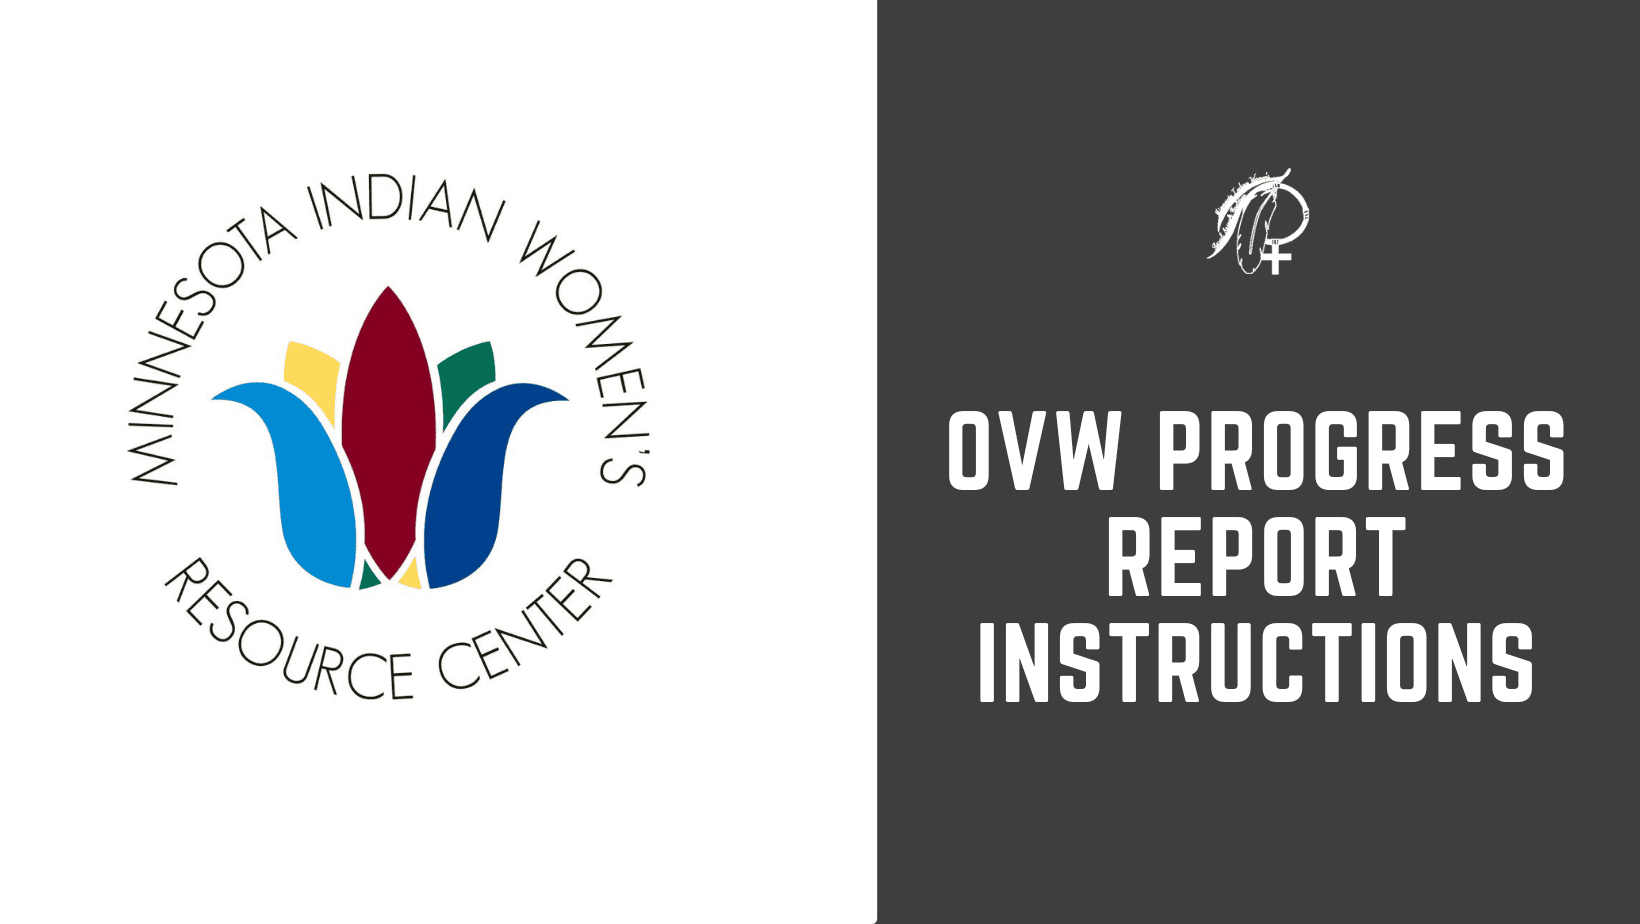 OVW Progress Report Instructions